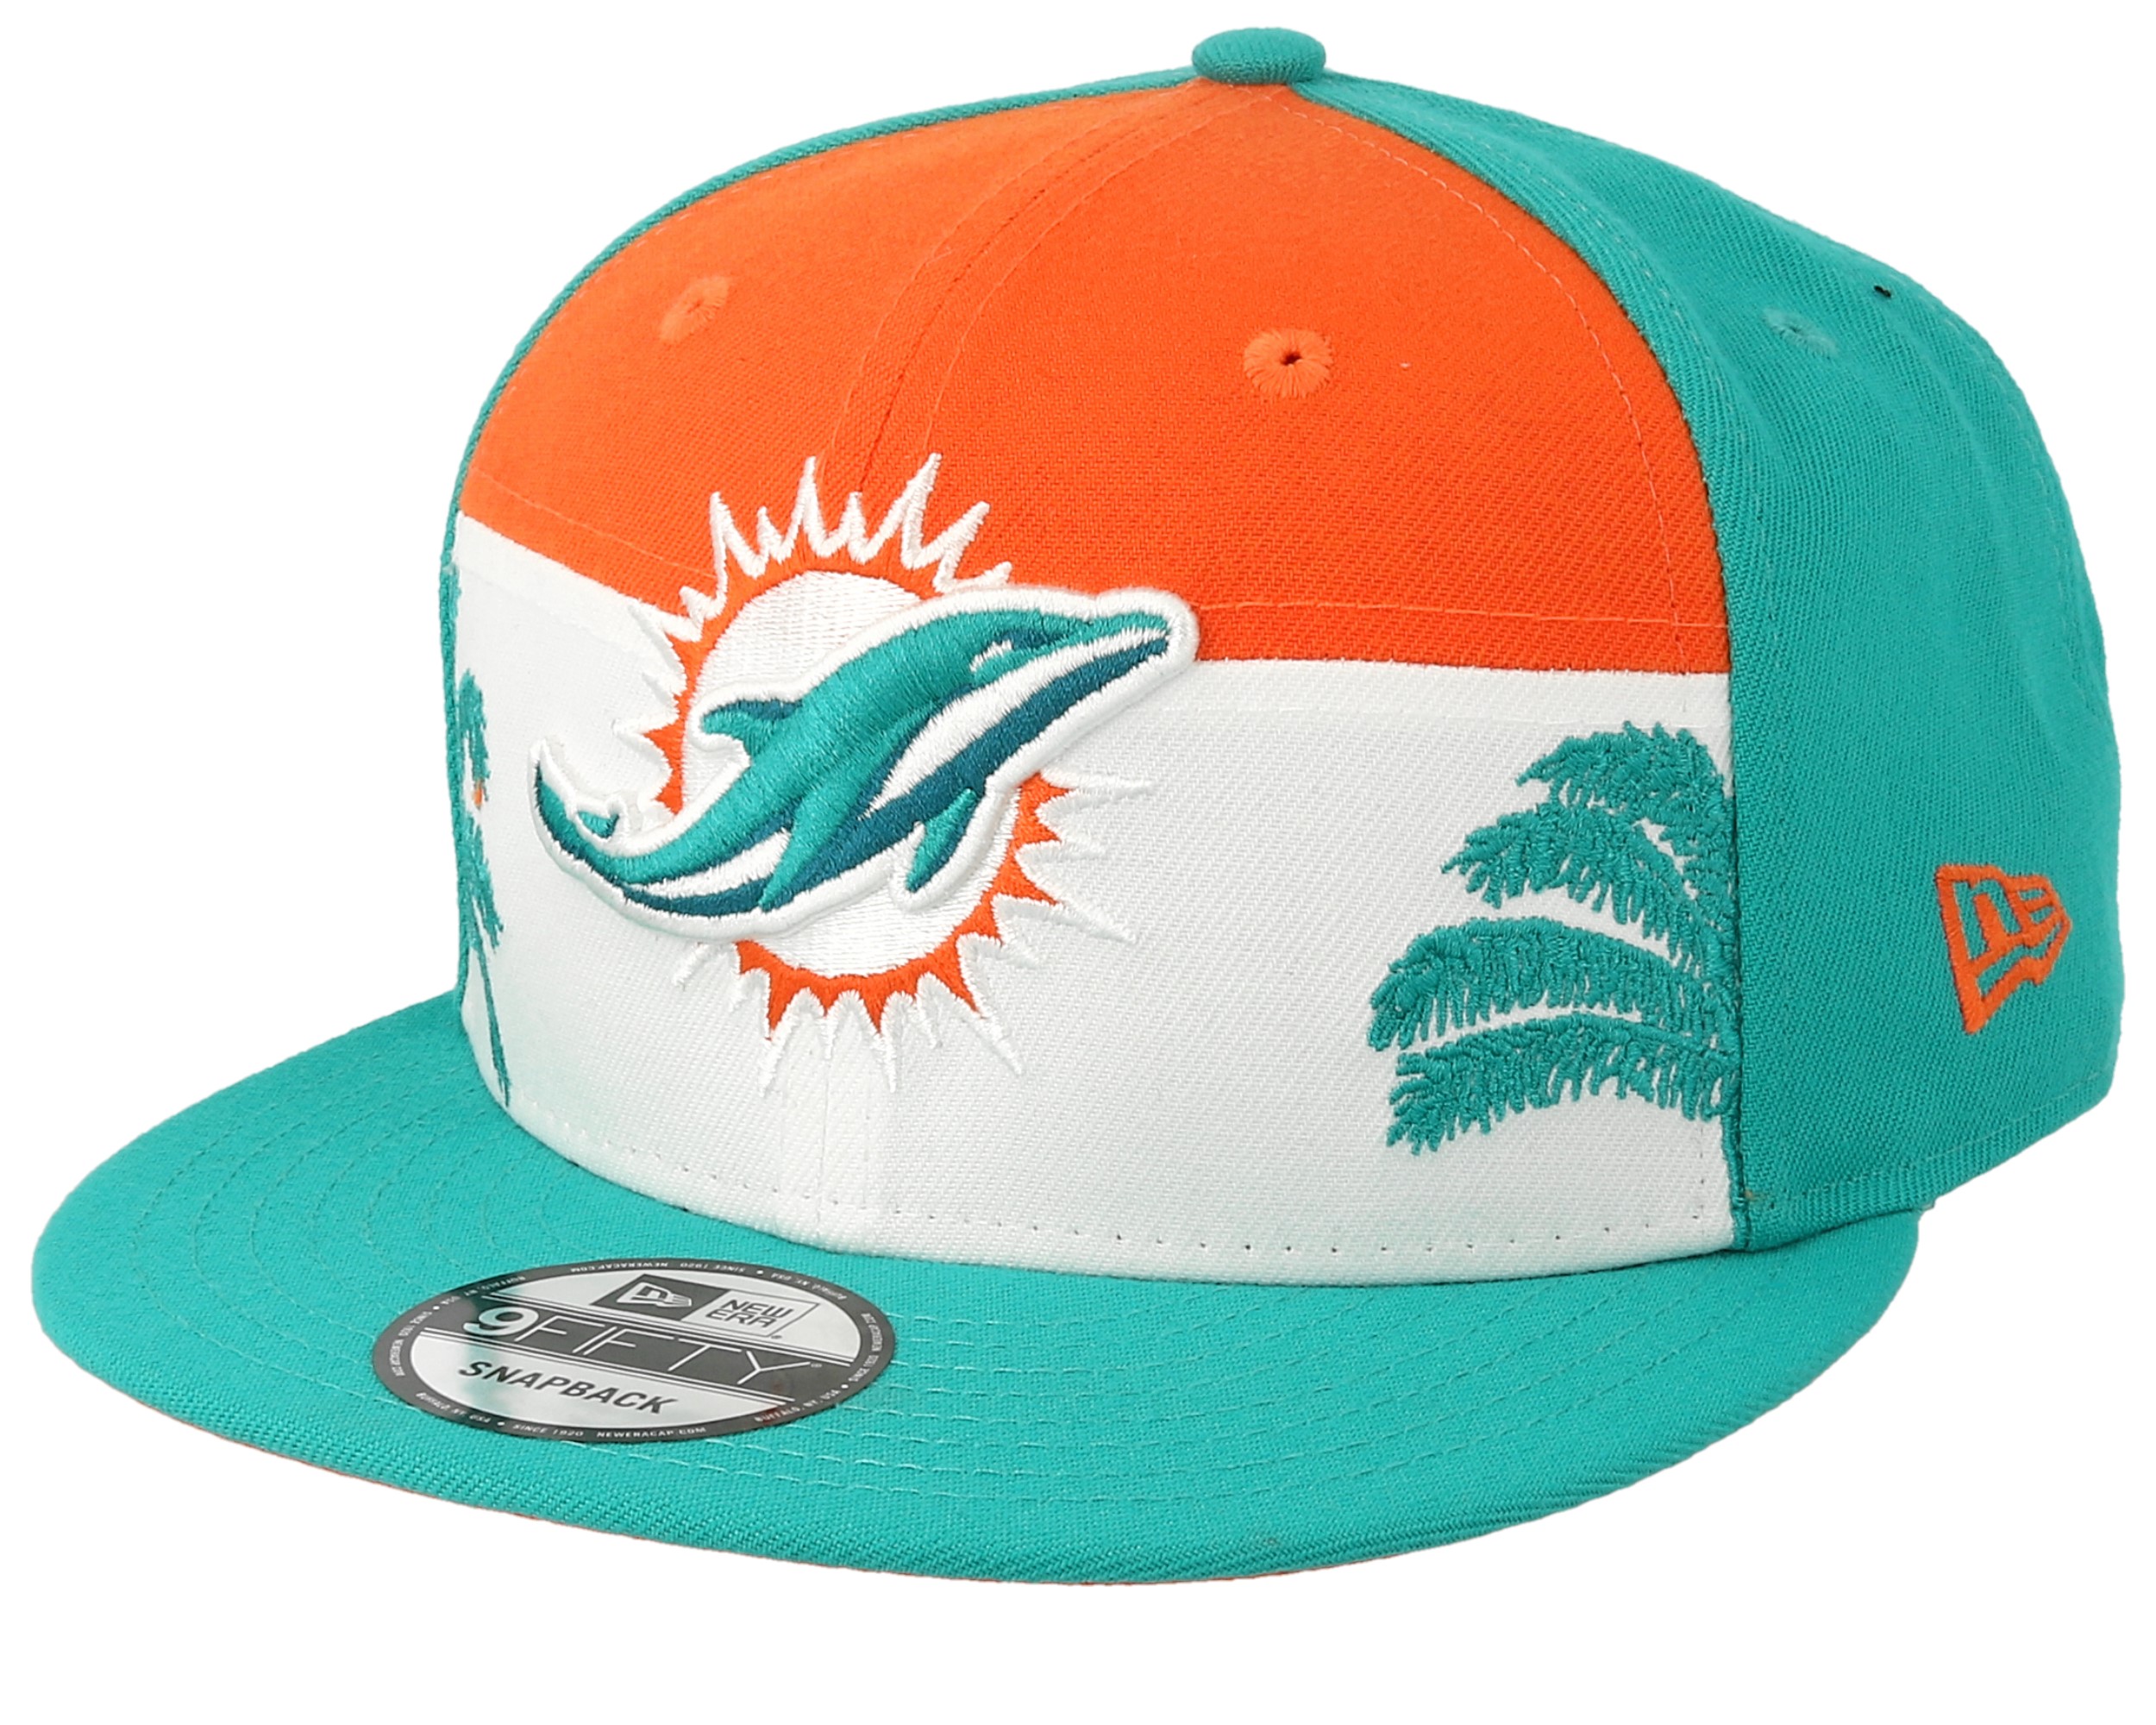 Miami Dolphins 9Fifty NFL Draft 2019 Orange/White/Teal Snapback